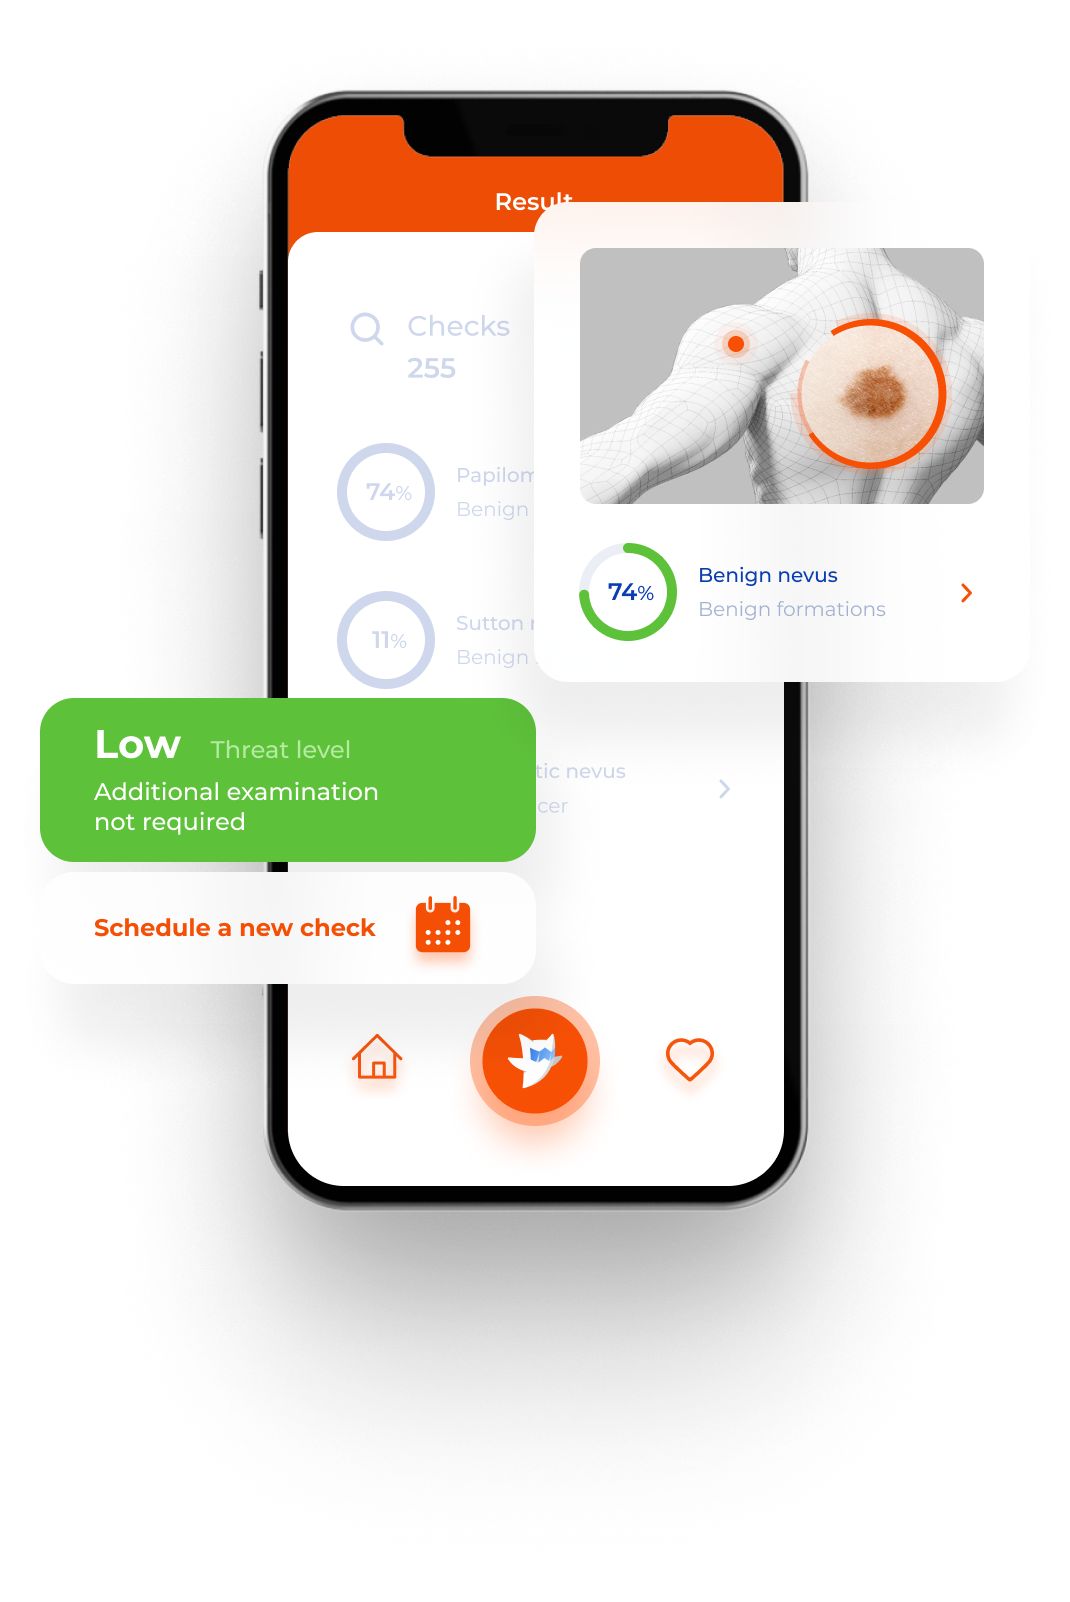 Skinive - An app to track skin health